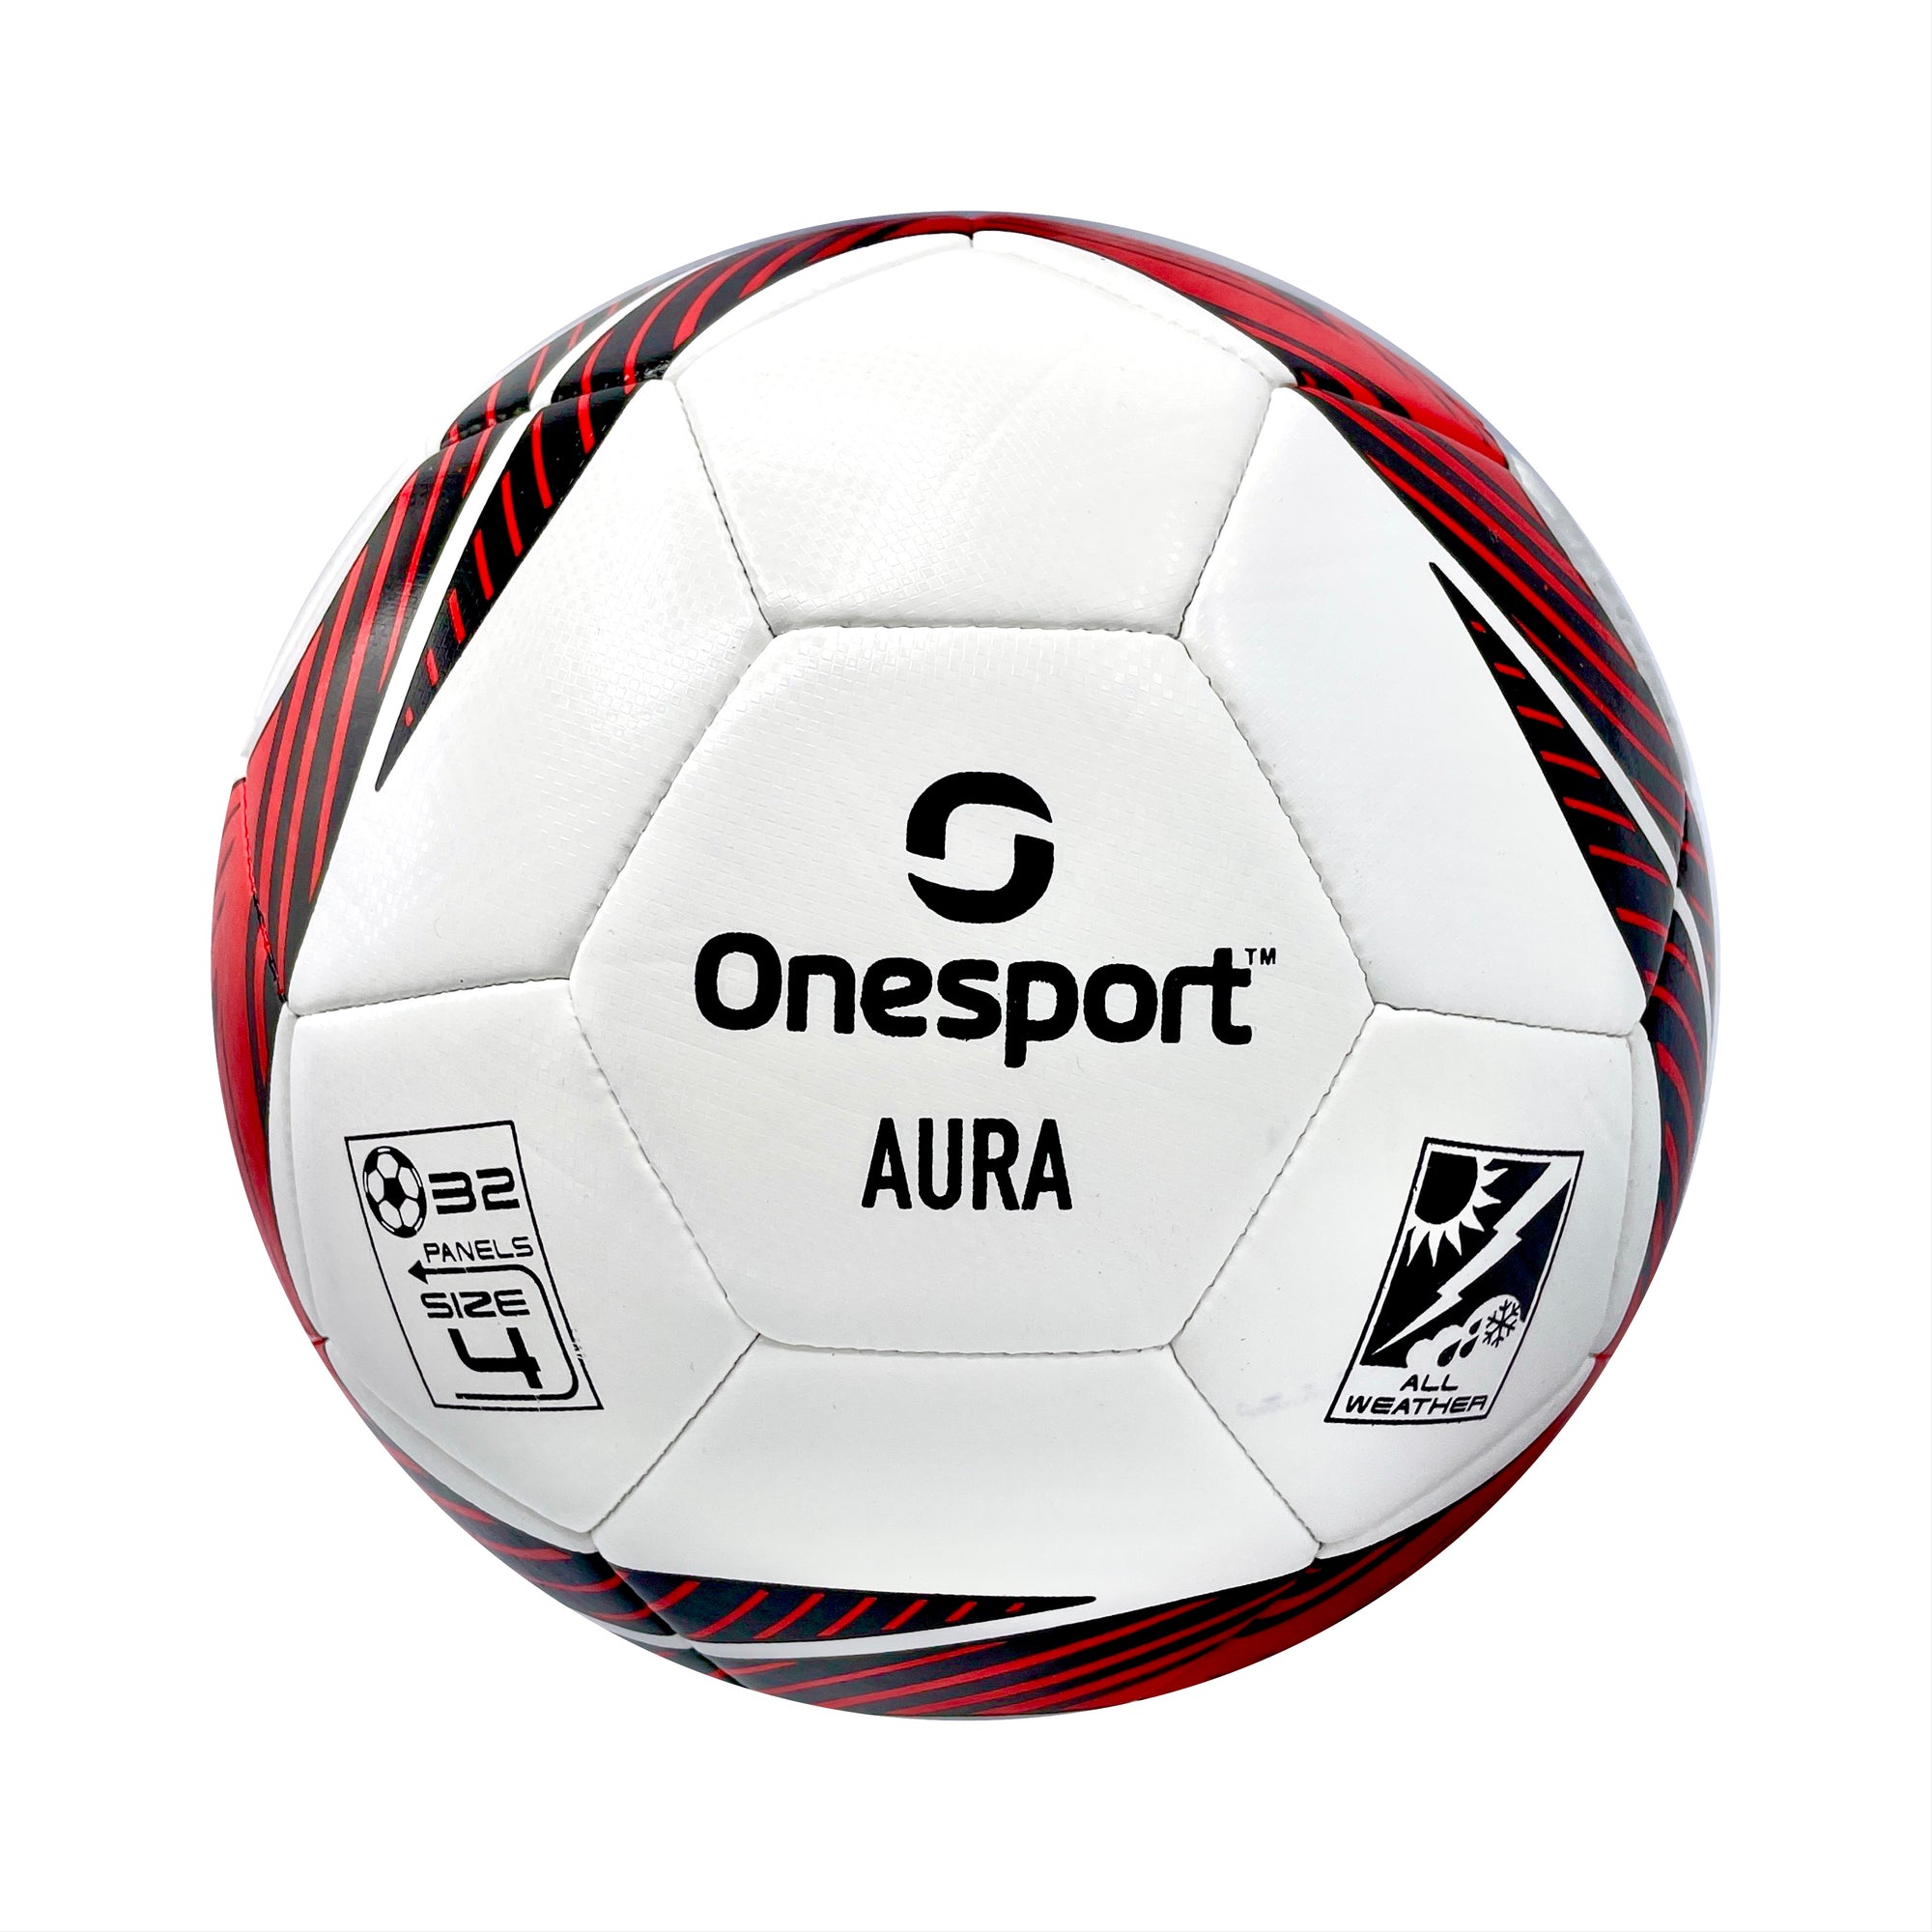 Onesport Aura Football Size 3 White/Red